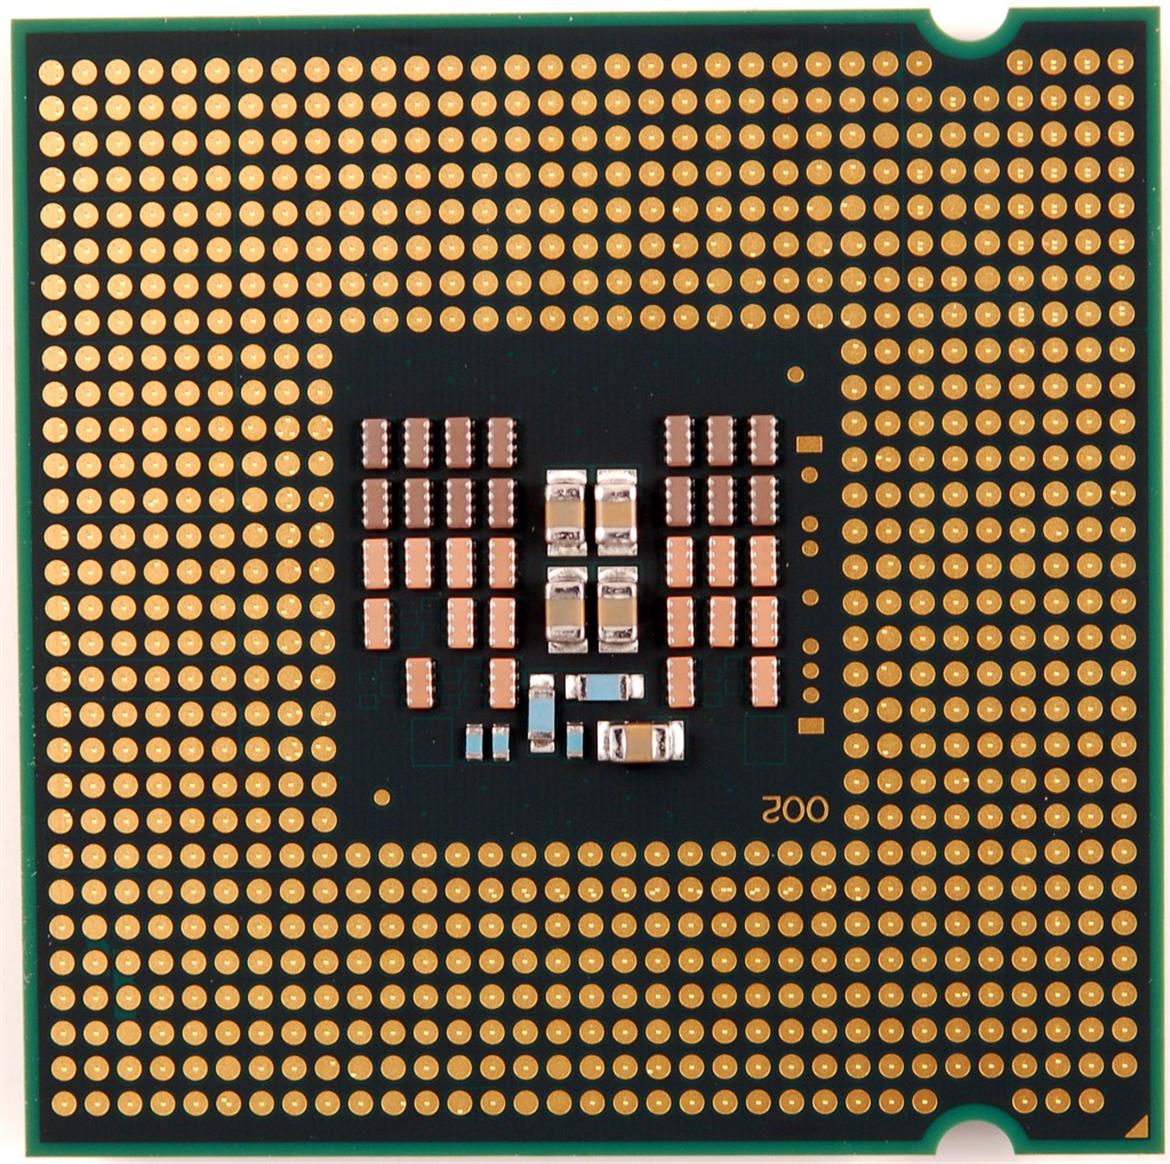 Intel Core 2 Quad Q8400 CPU Review